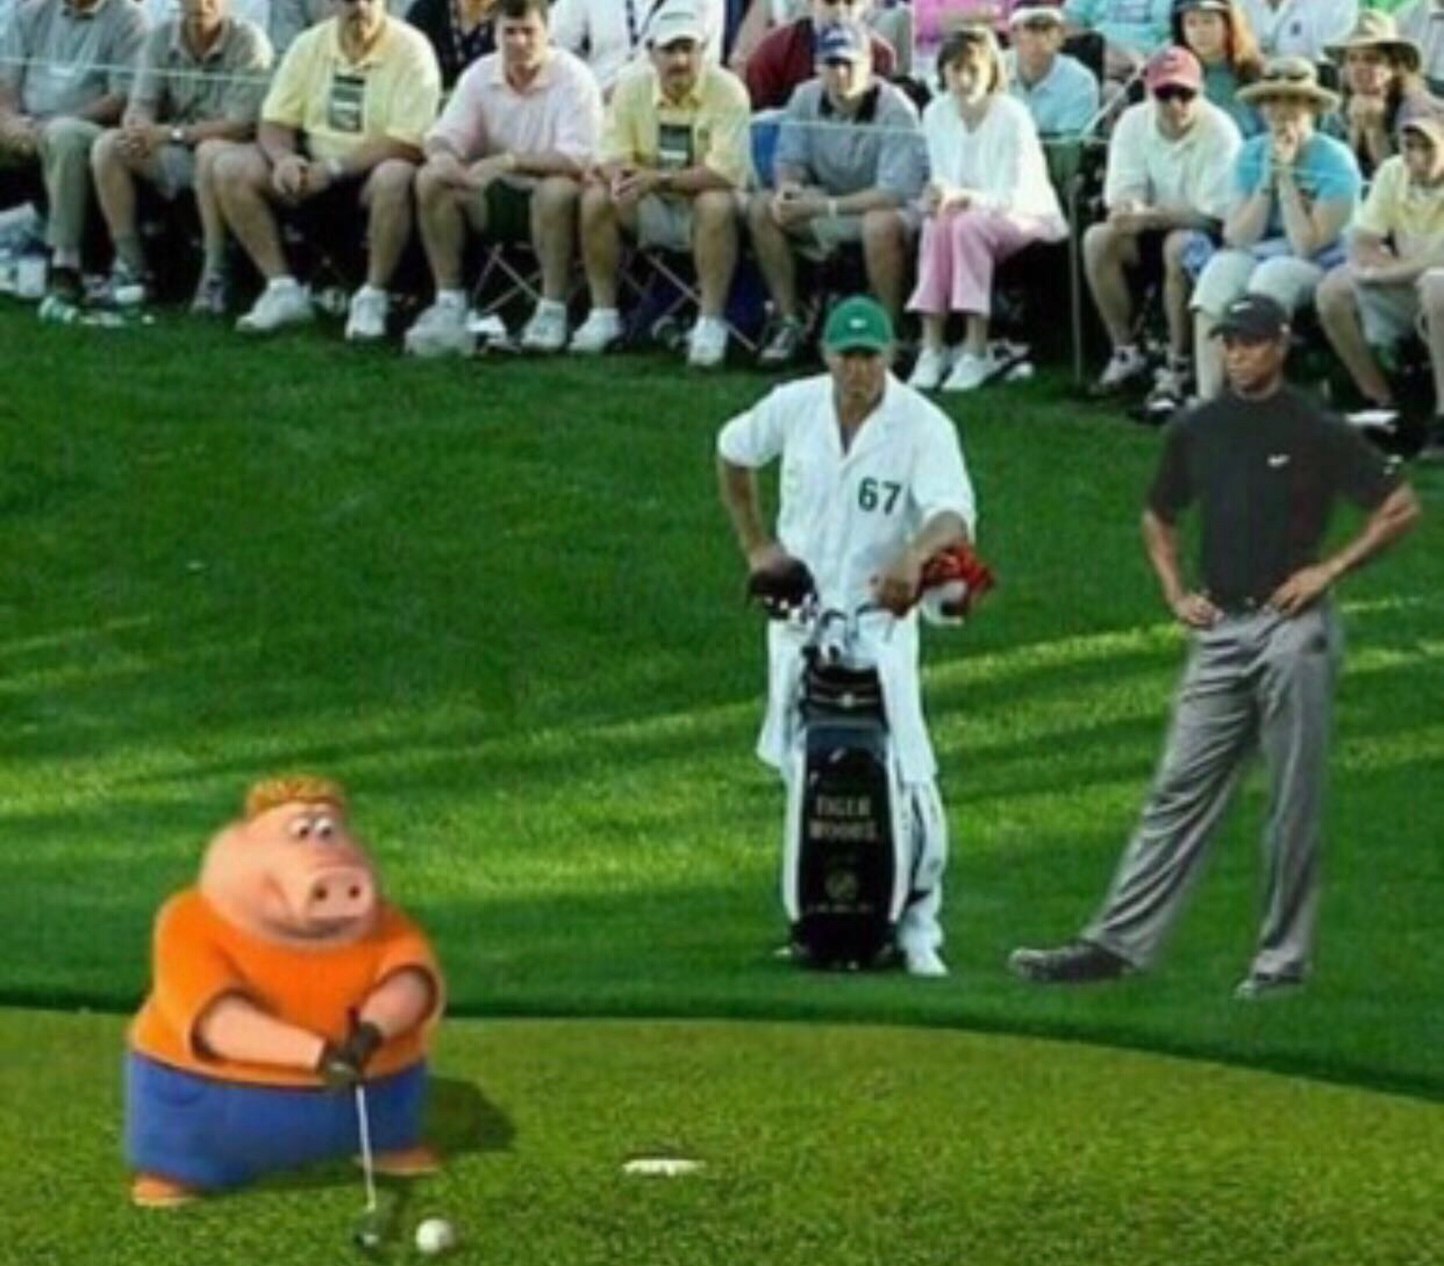 best player of golf - meme